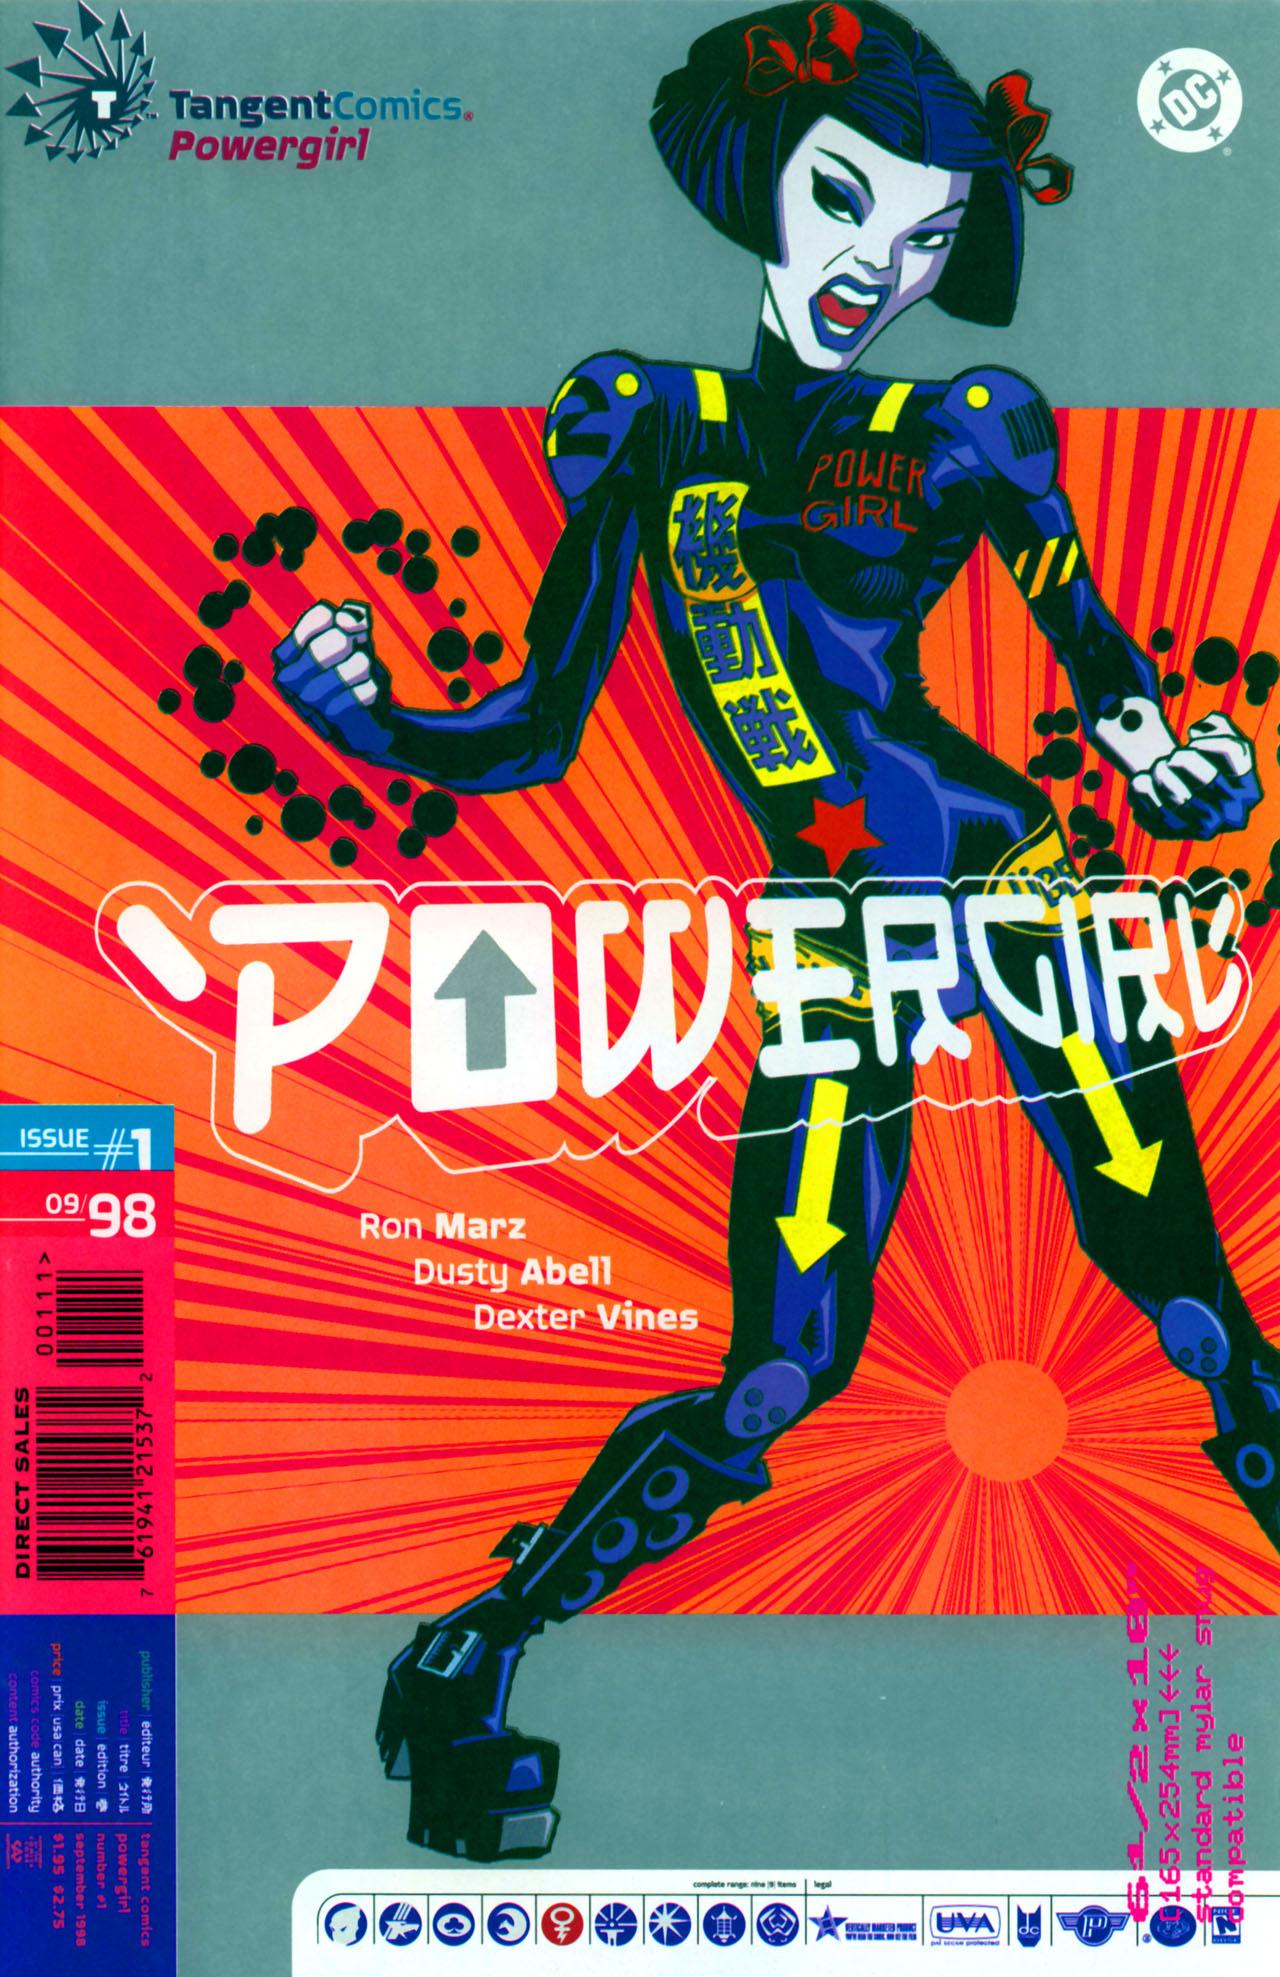 Tangent Comics: Powergirl Vol. 1 #1